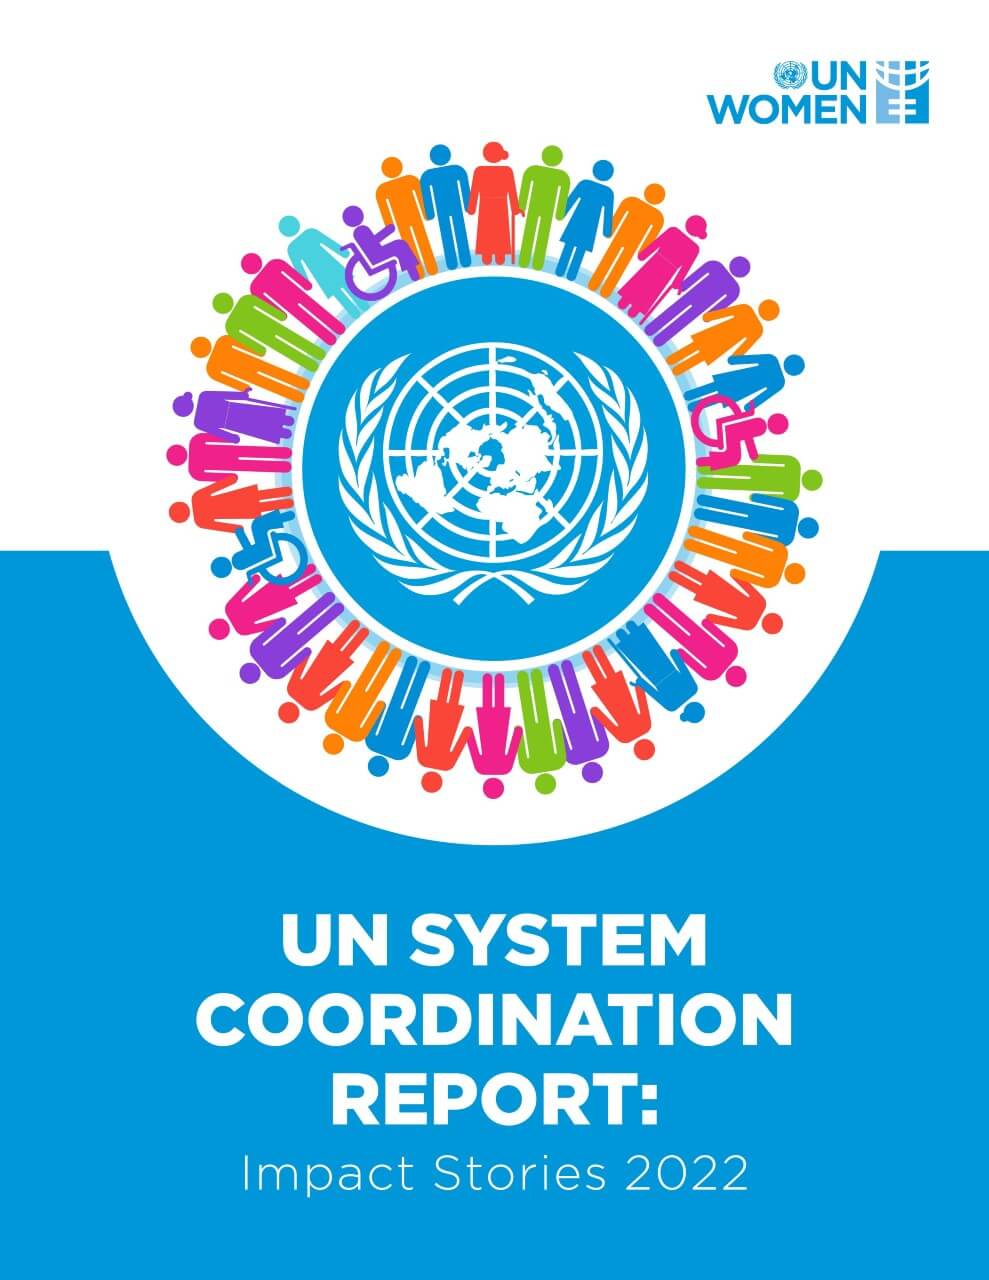 UN system coordination report: Impact stories 2022